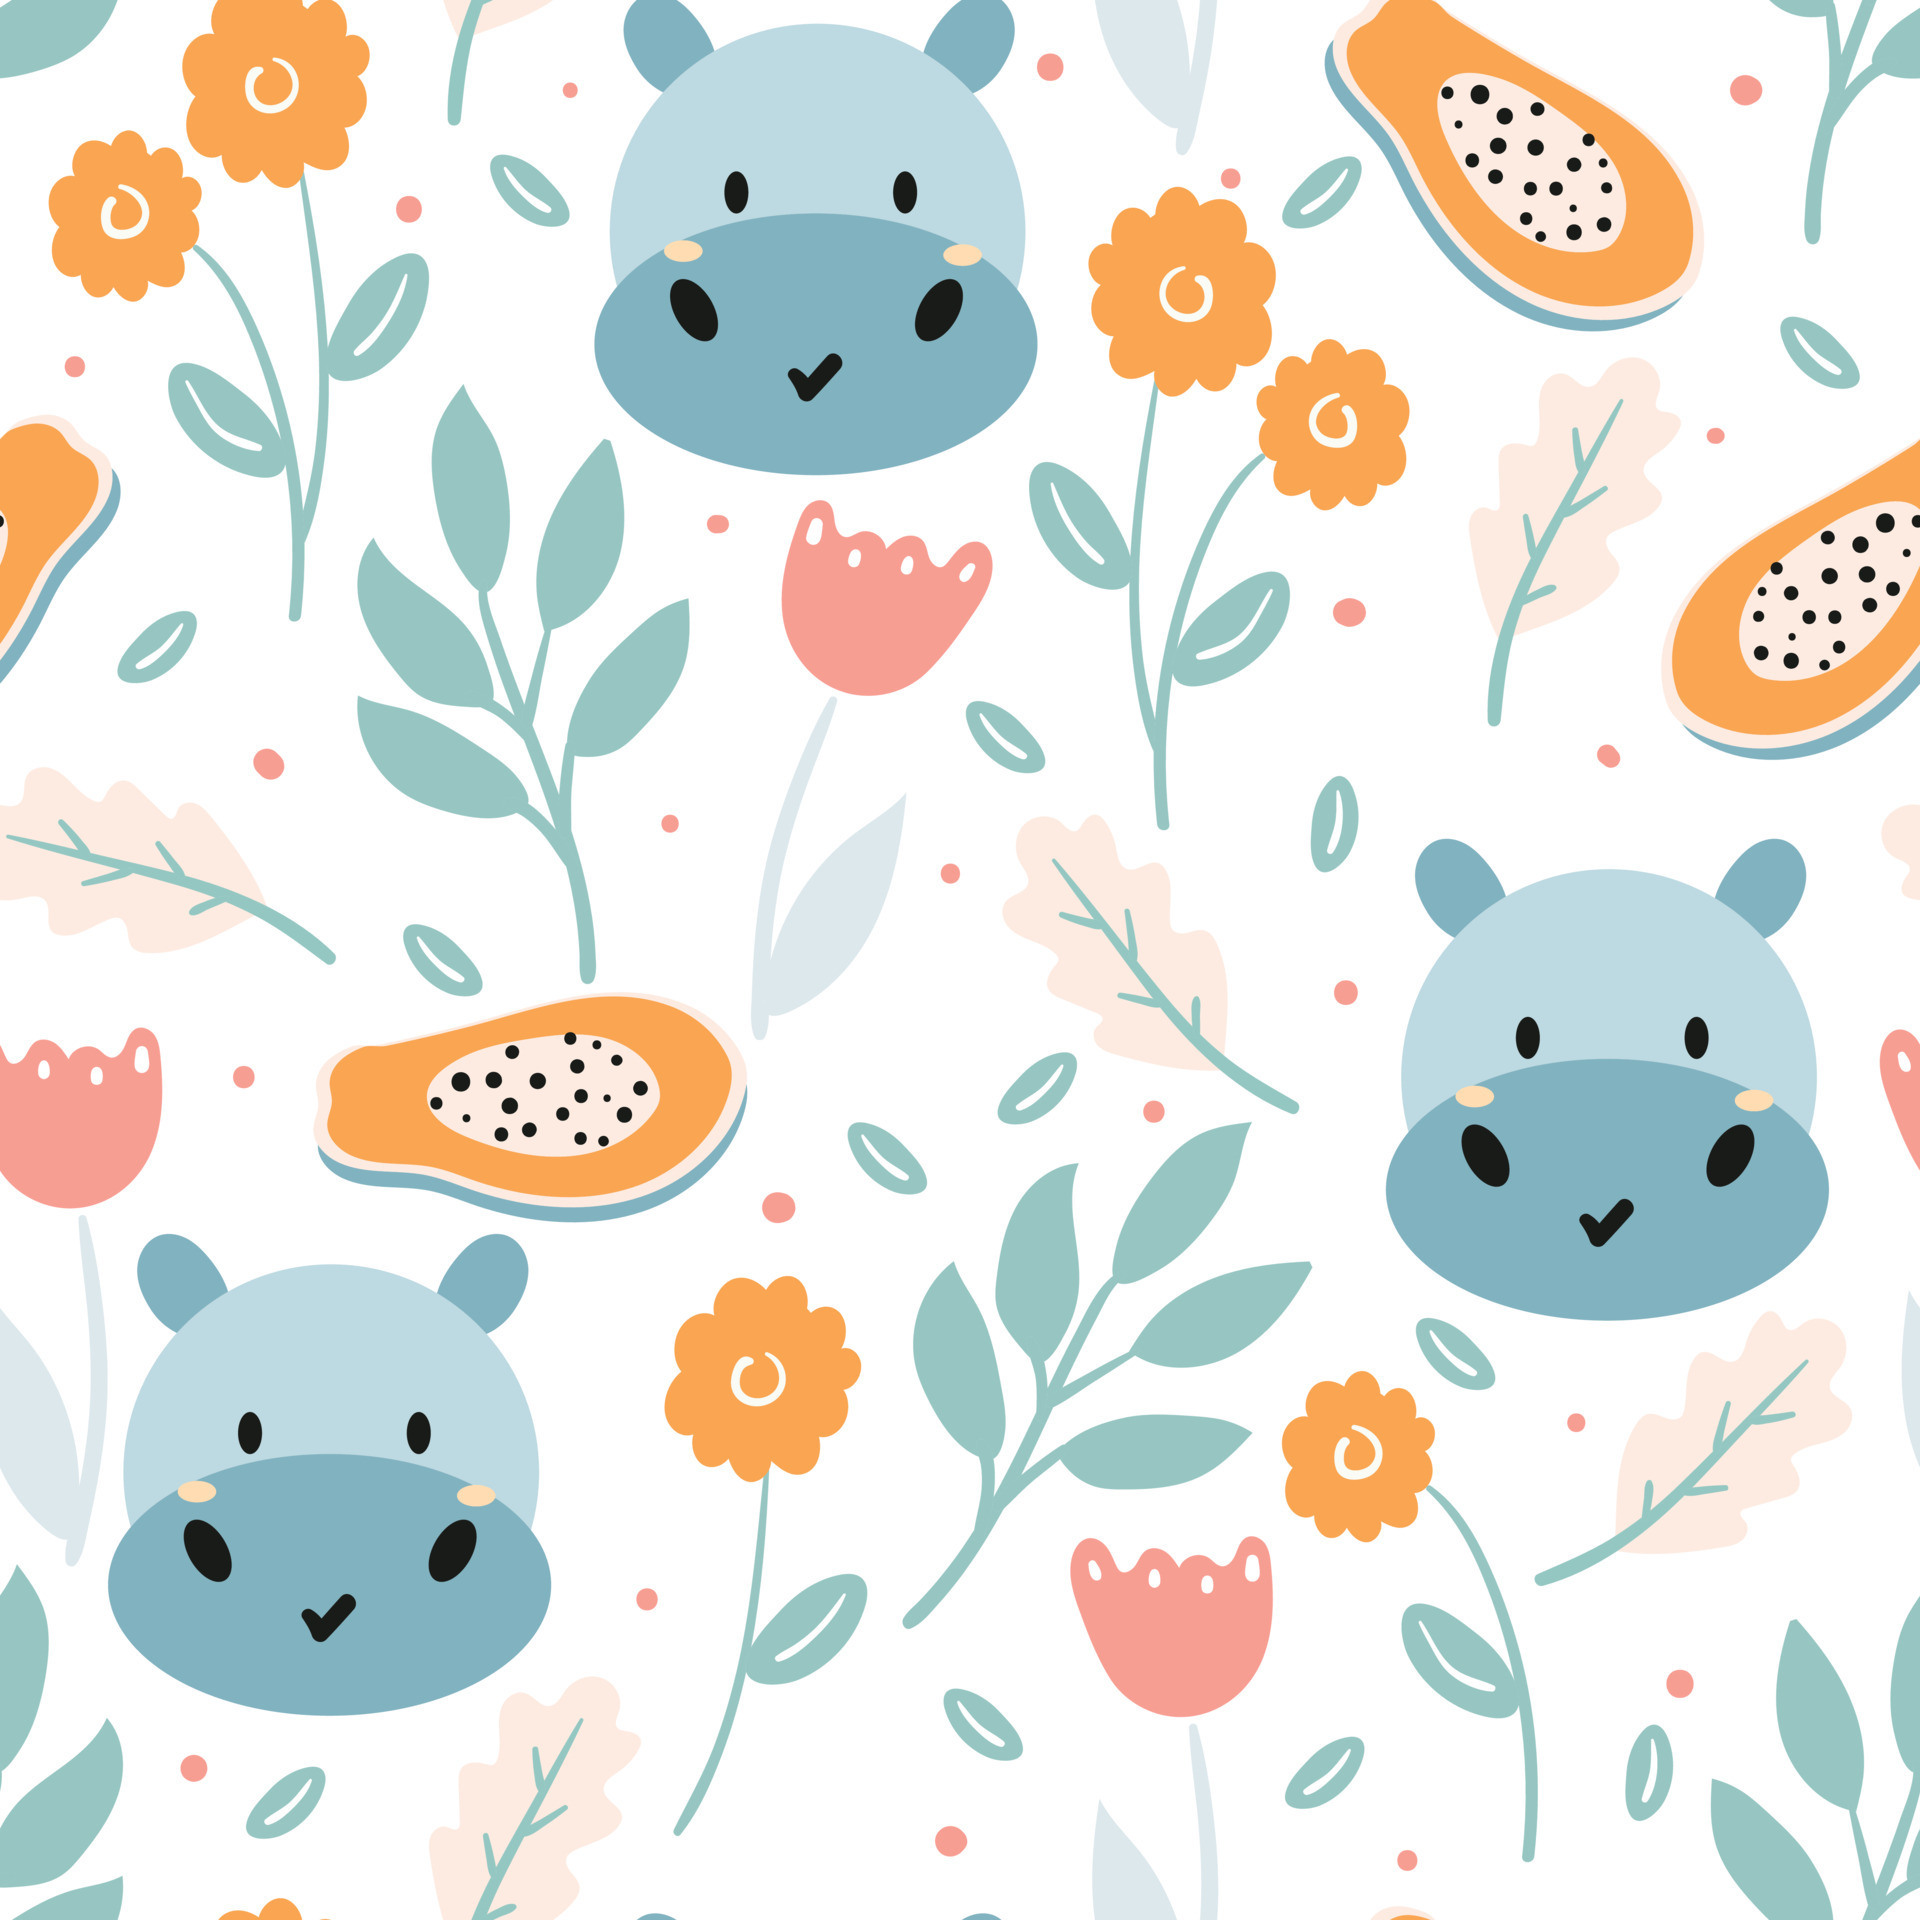 Baby Hippo - Other & Animals Background Wallpapers on Desktop Nexus (Image  2442344)